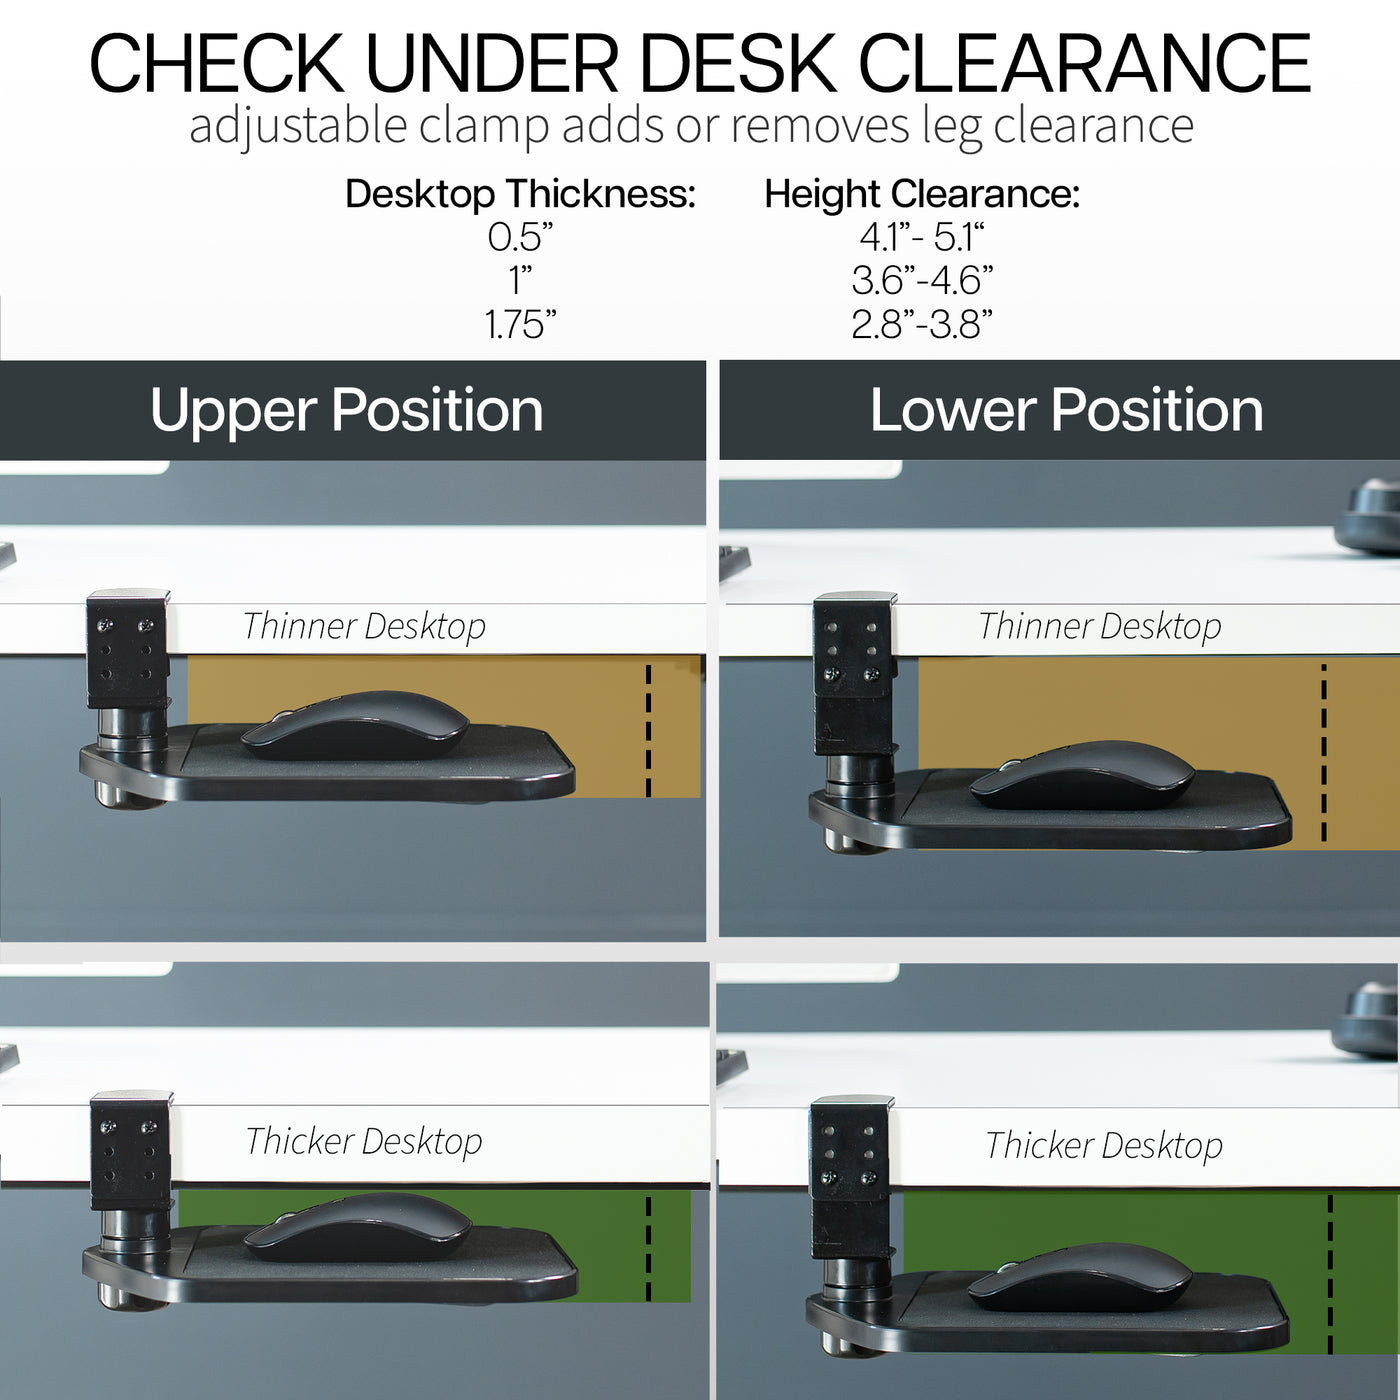 Ergonomic clamp-on mouse pad platform adjustable attachment for desk.